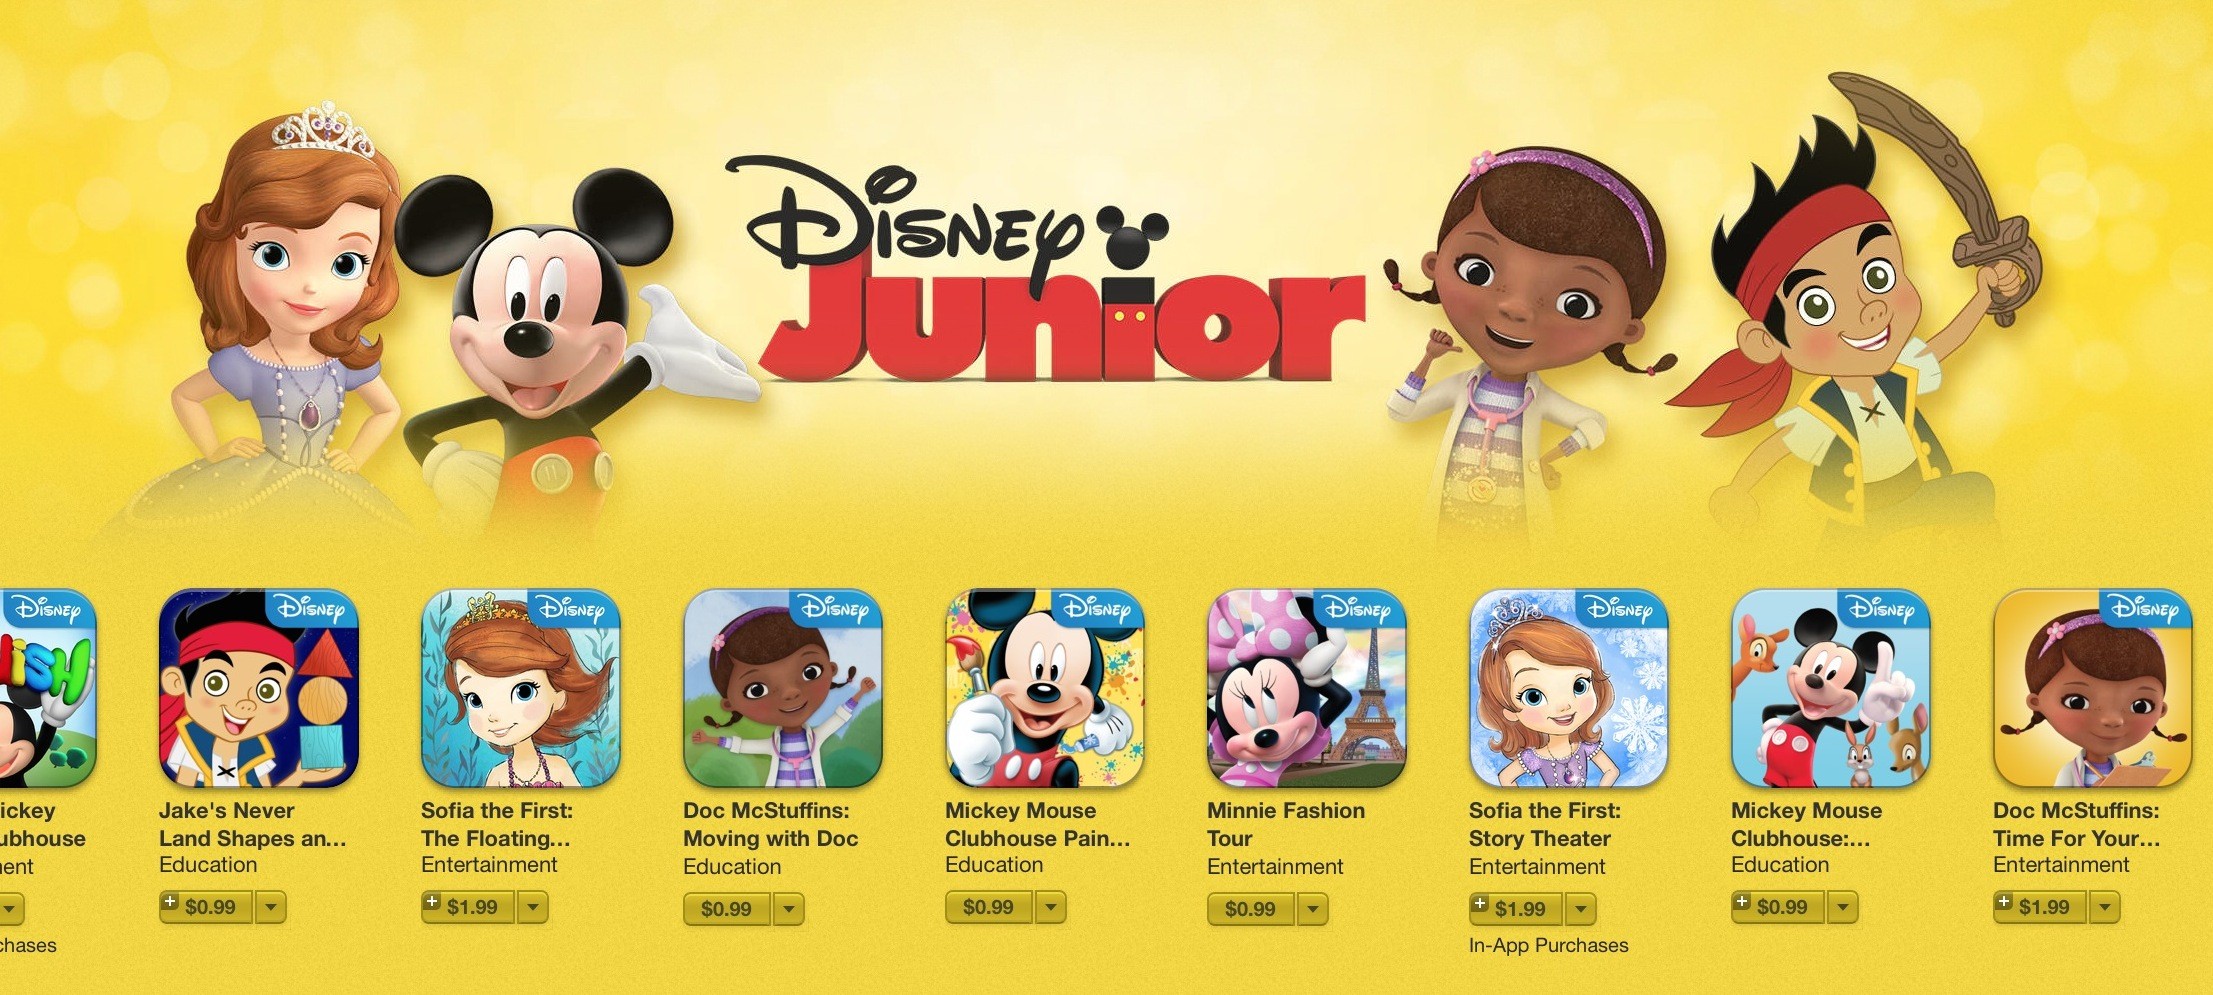 App review of Disney Junior Play - Children and Media Australia